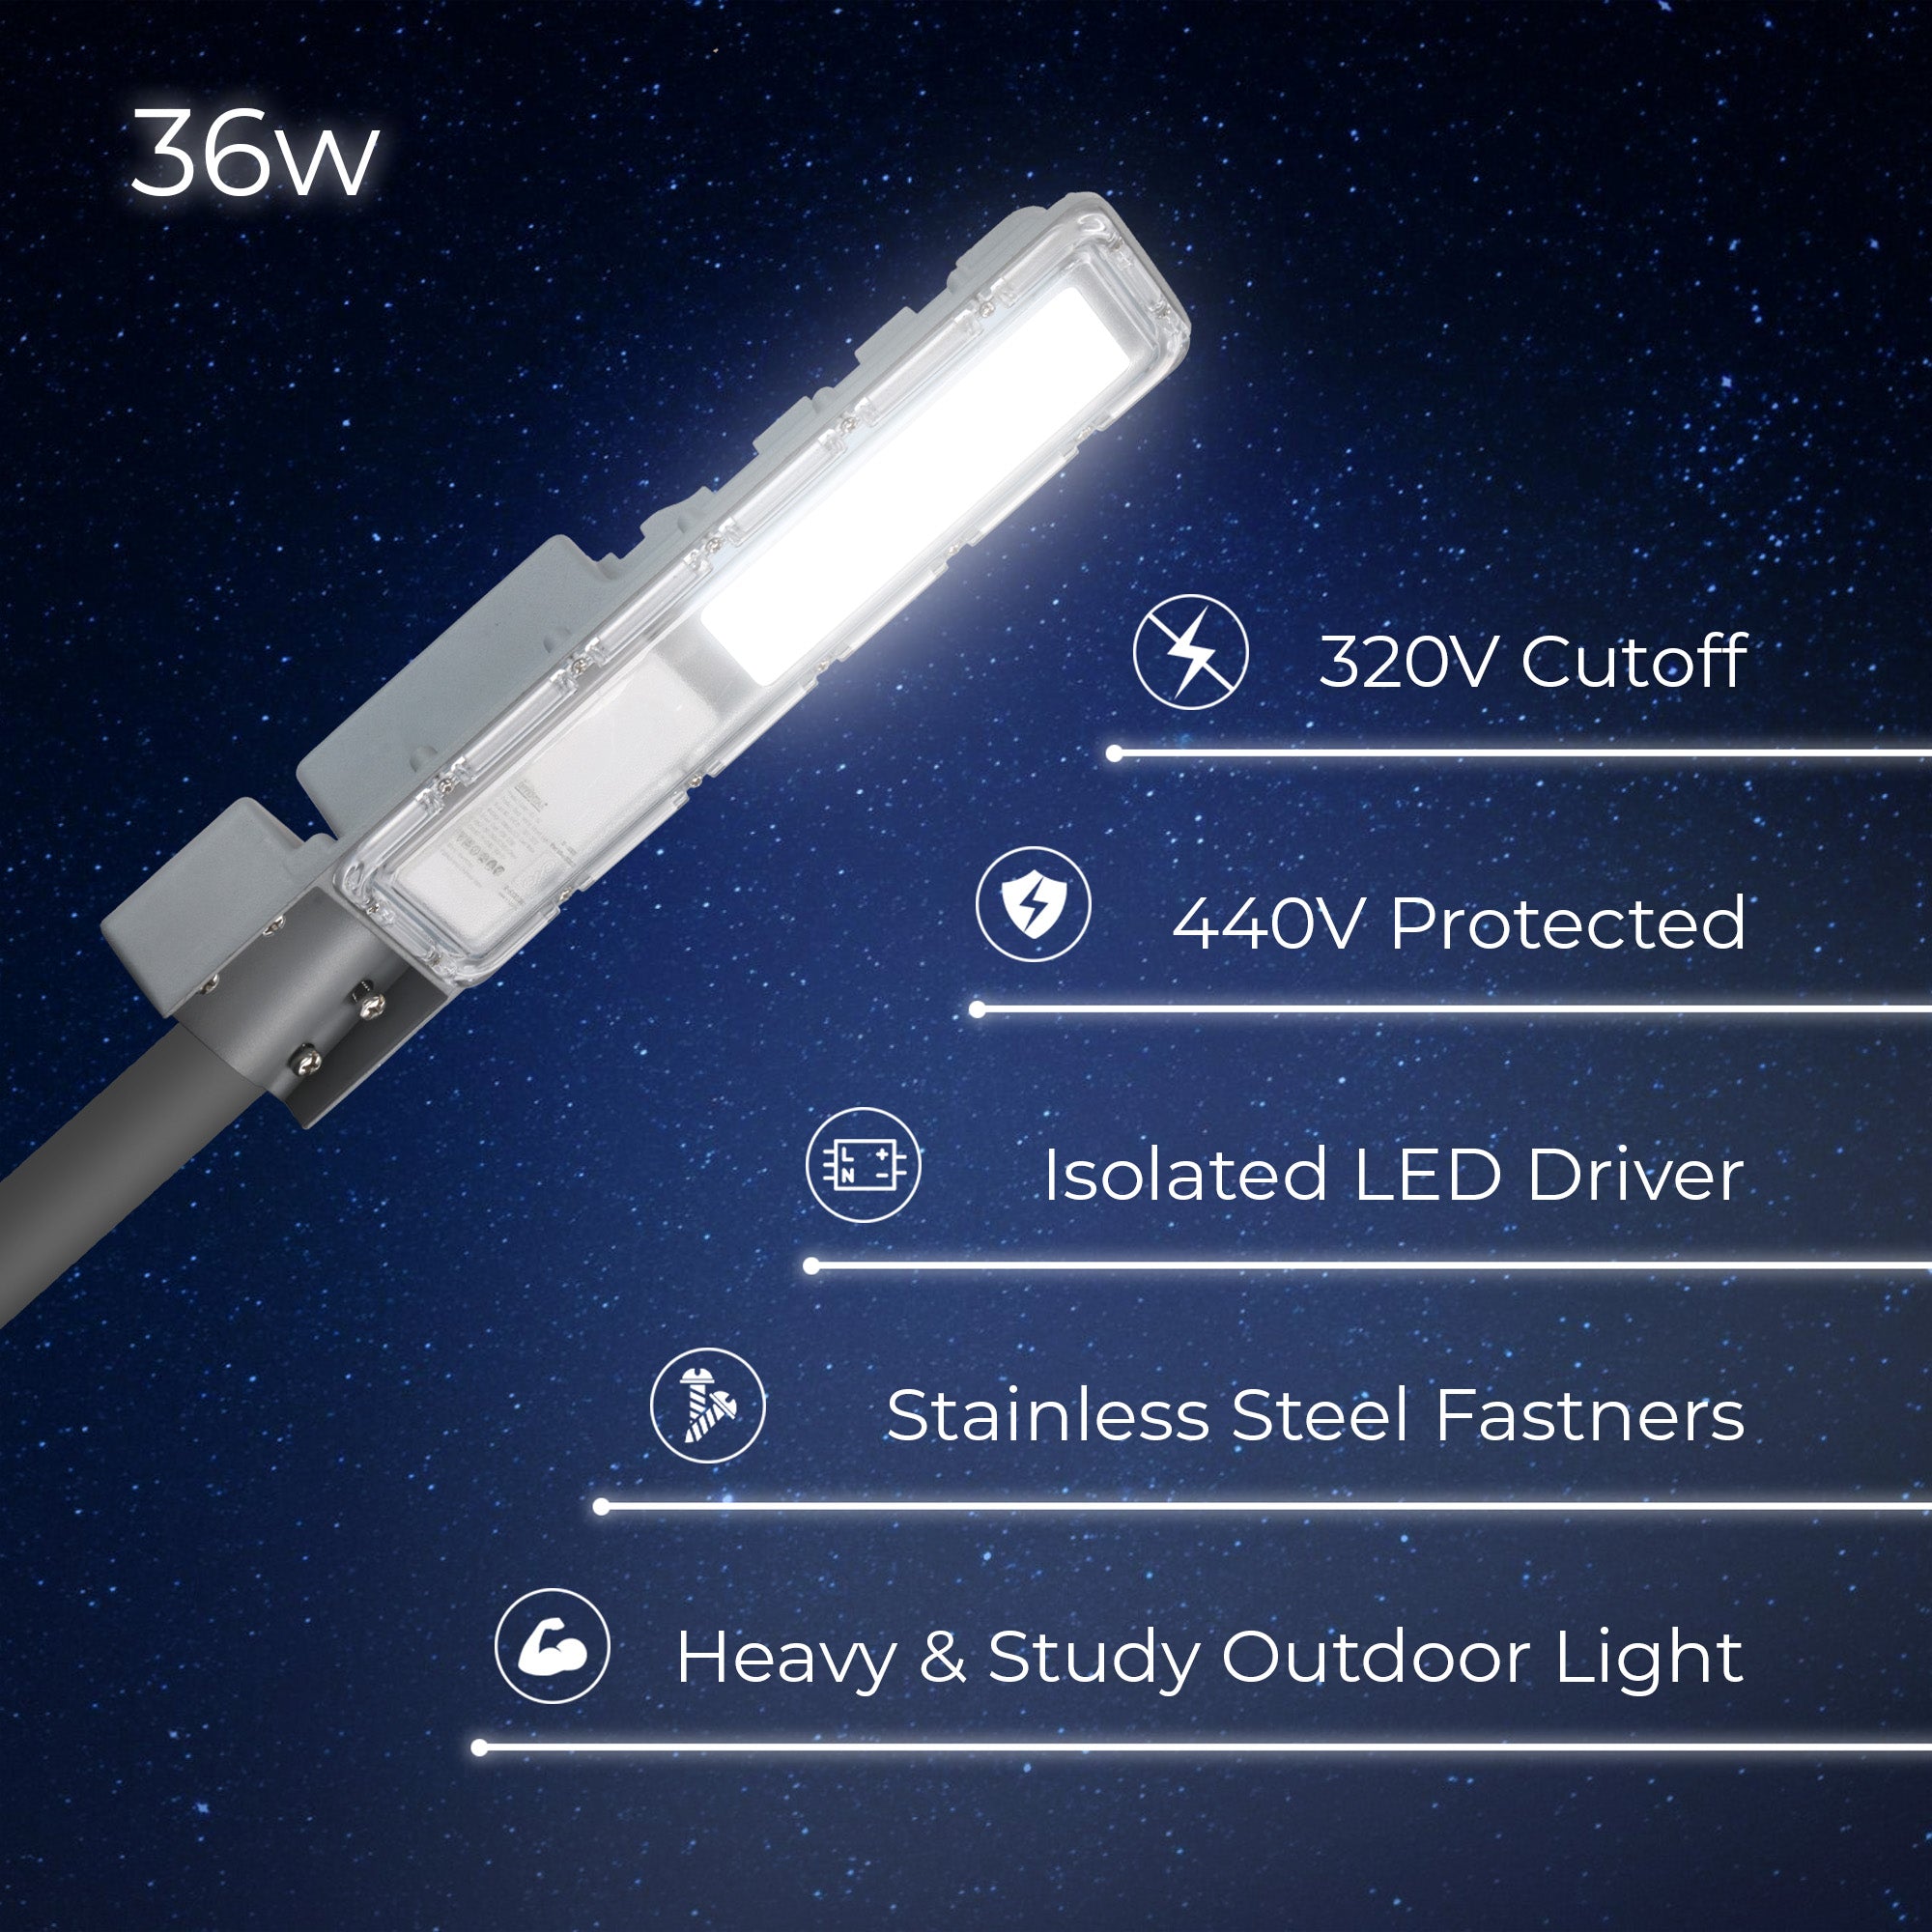 Specifications of Veeta 36W led path light #watts_36w